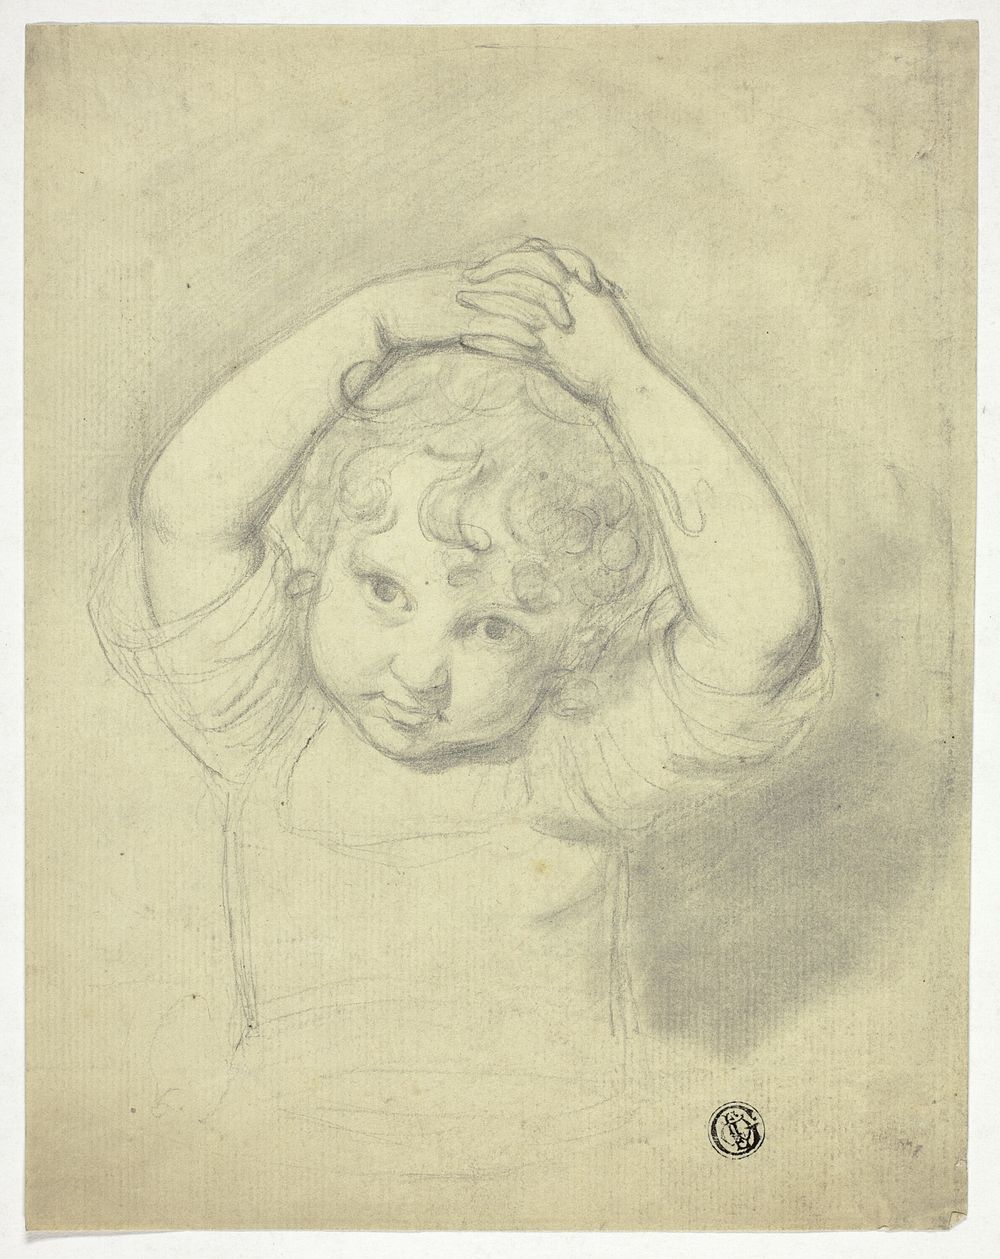 Child Holding Hands above Head by Samuel De Wilde